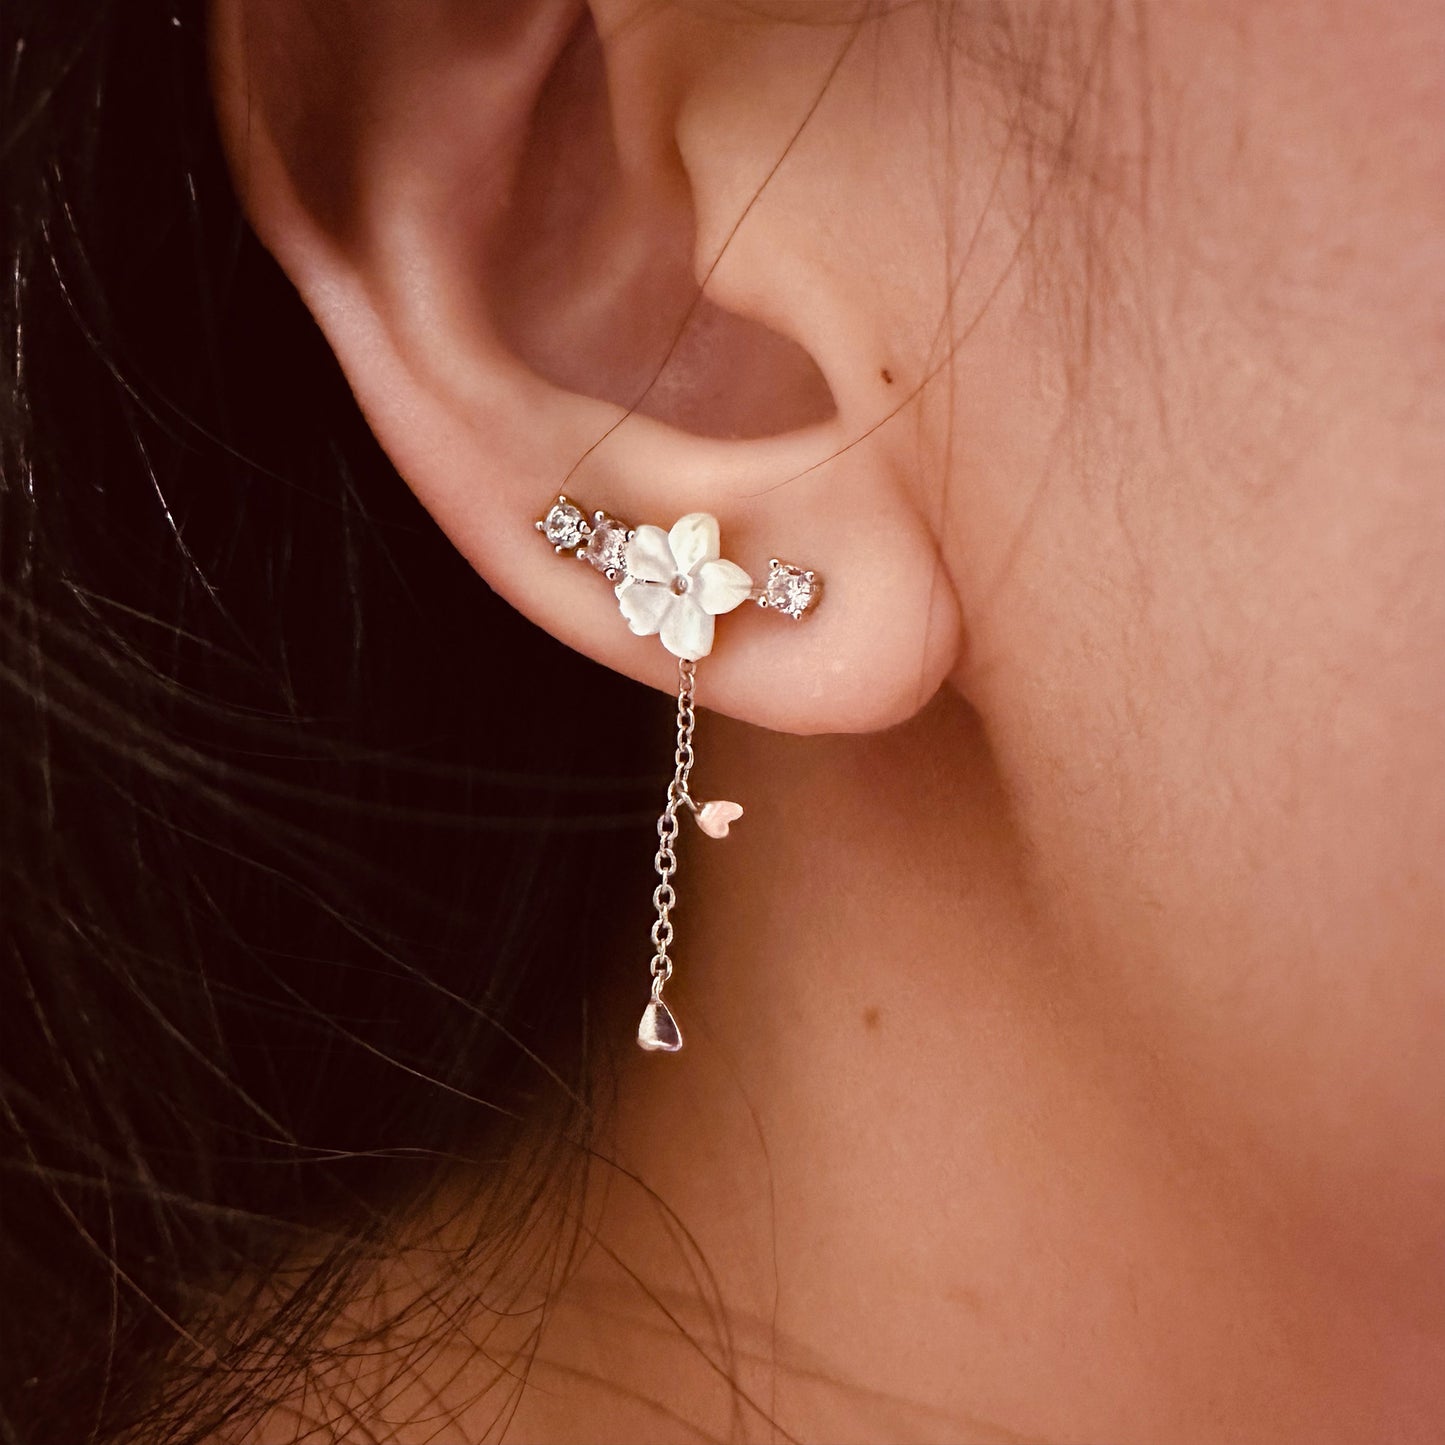 Cherry blossom flower dangle drop ear climber earrings